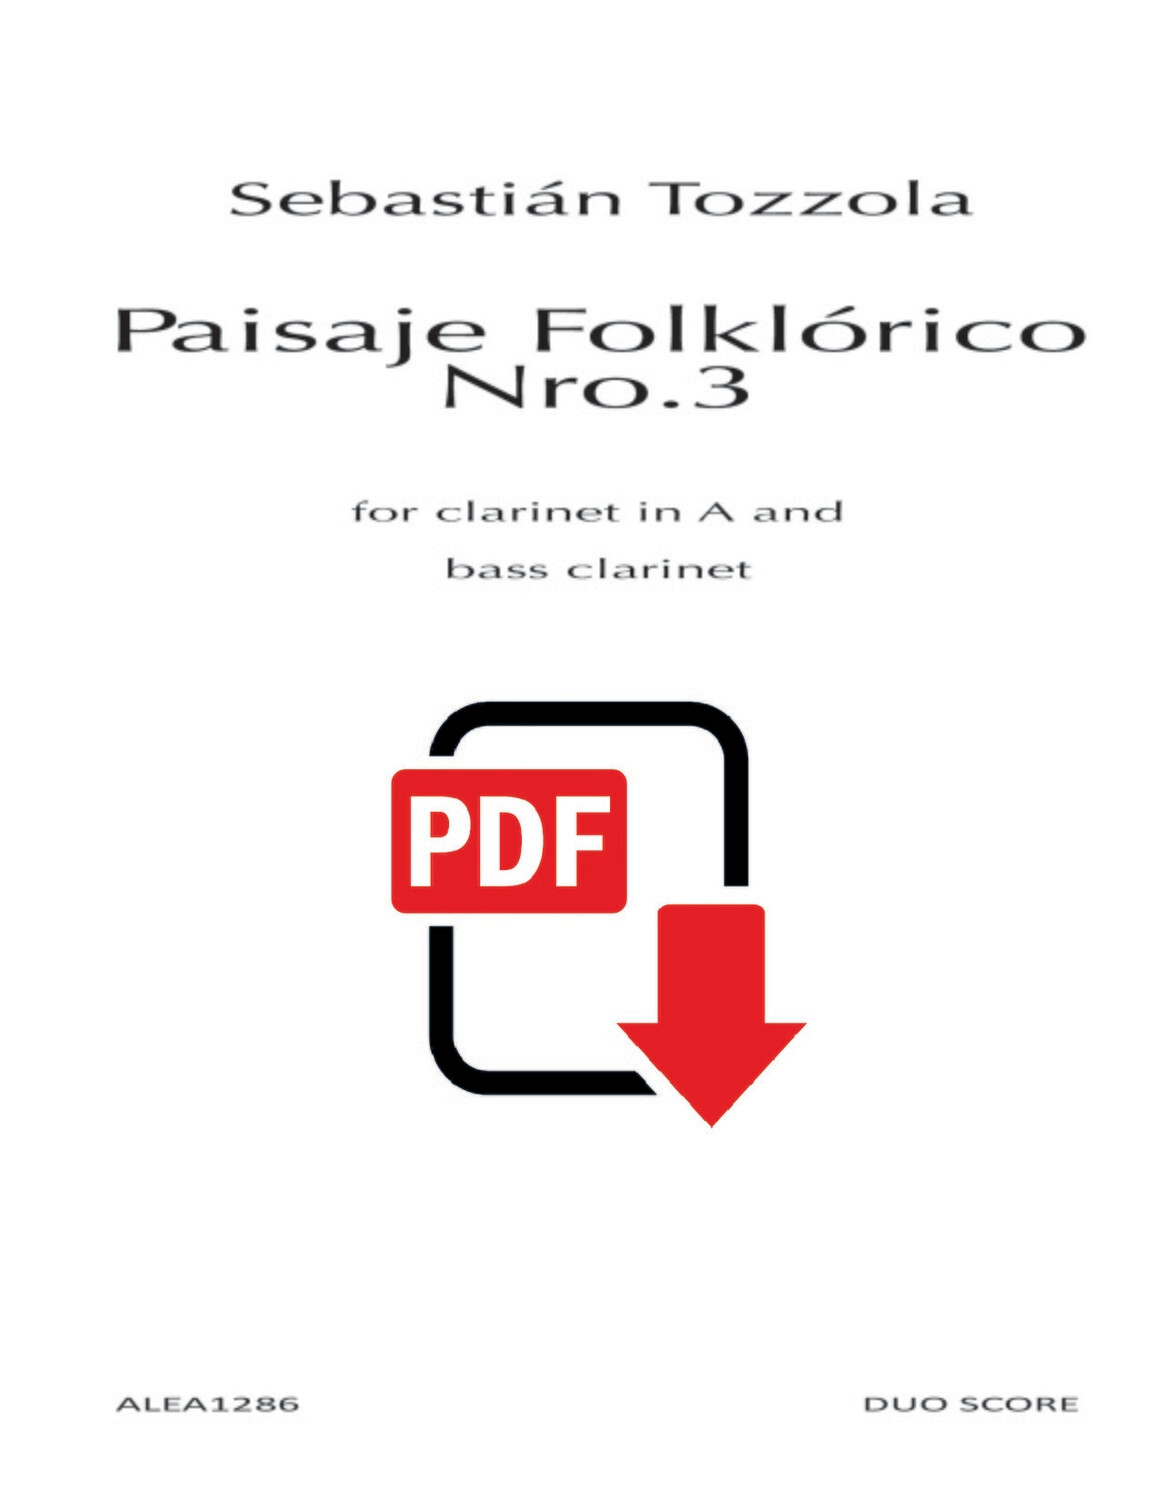 Tozzola: Paisaje Folklorico Nro.3 (PDF)